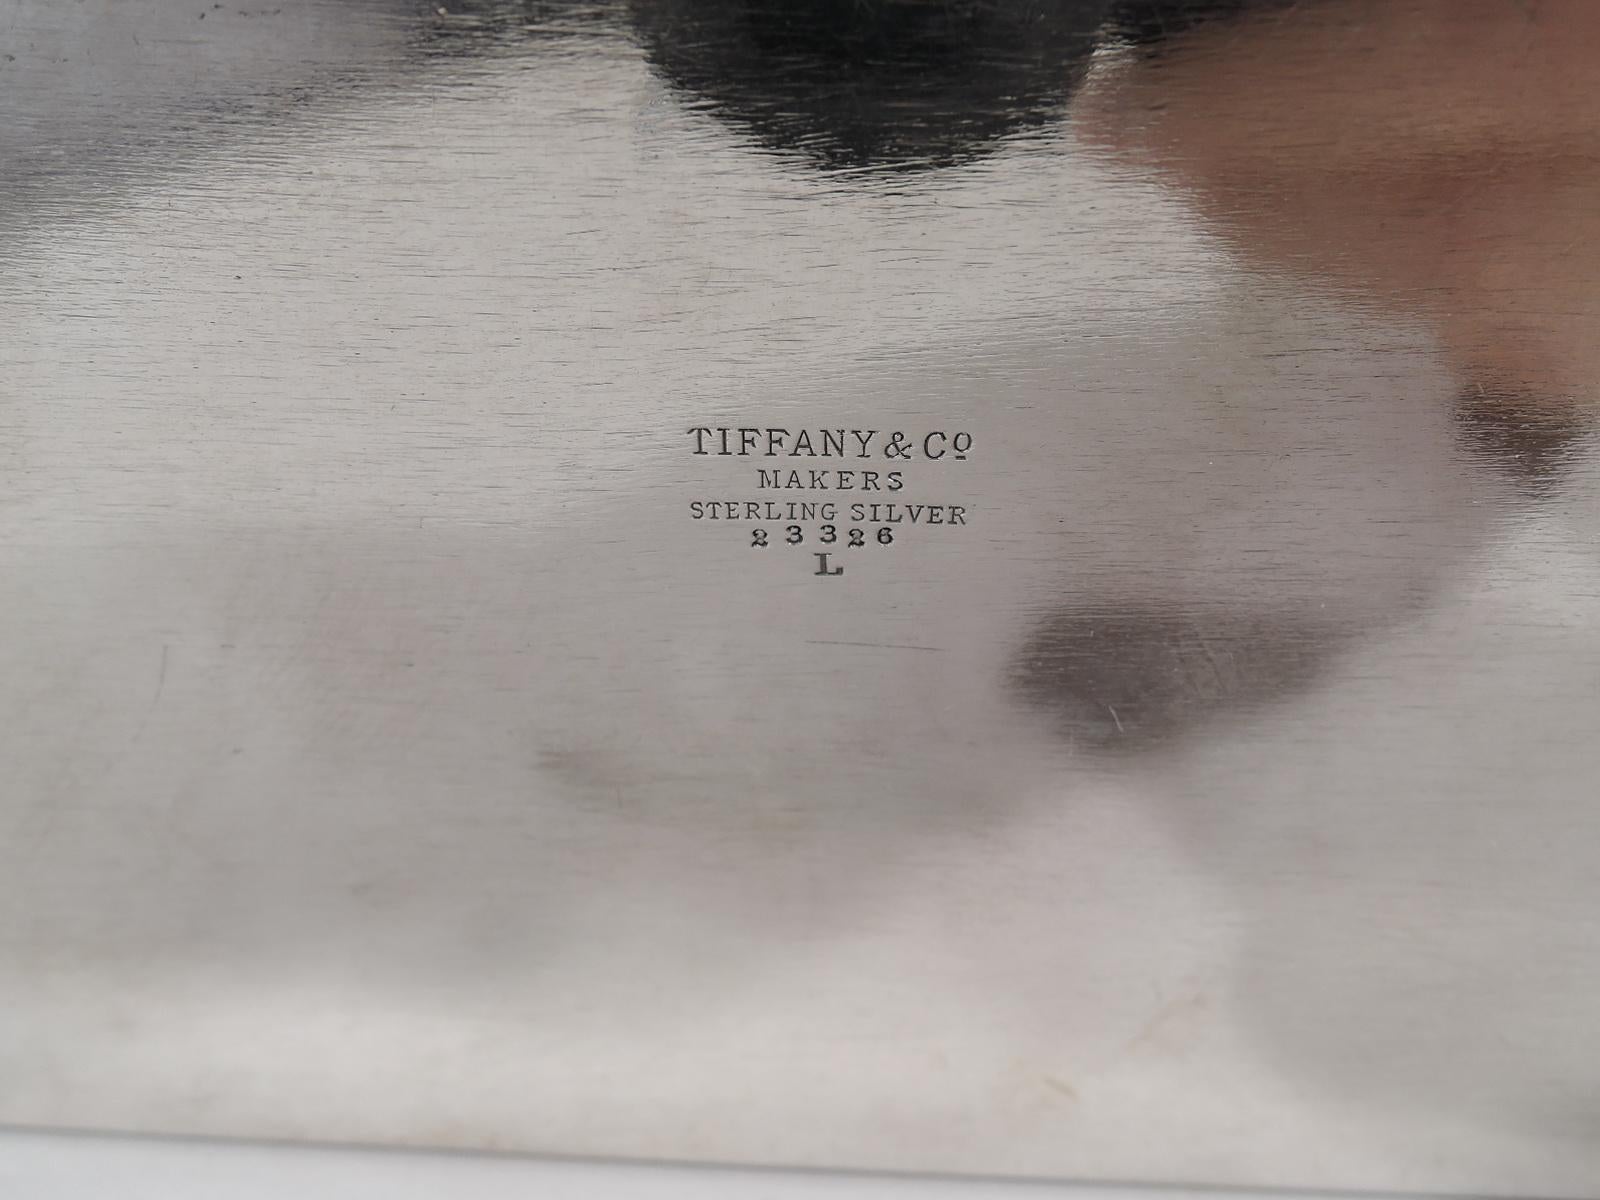 American Tiffany & Co. Midcentury Modern Sterling Silver Box